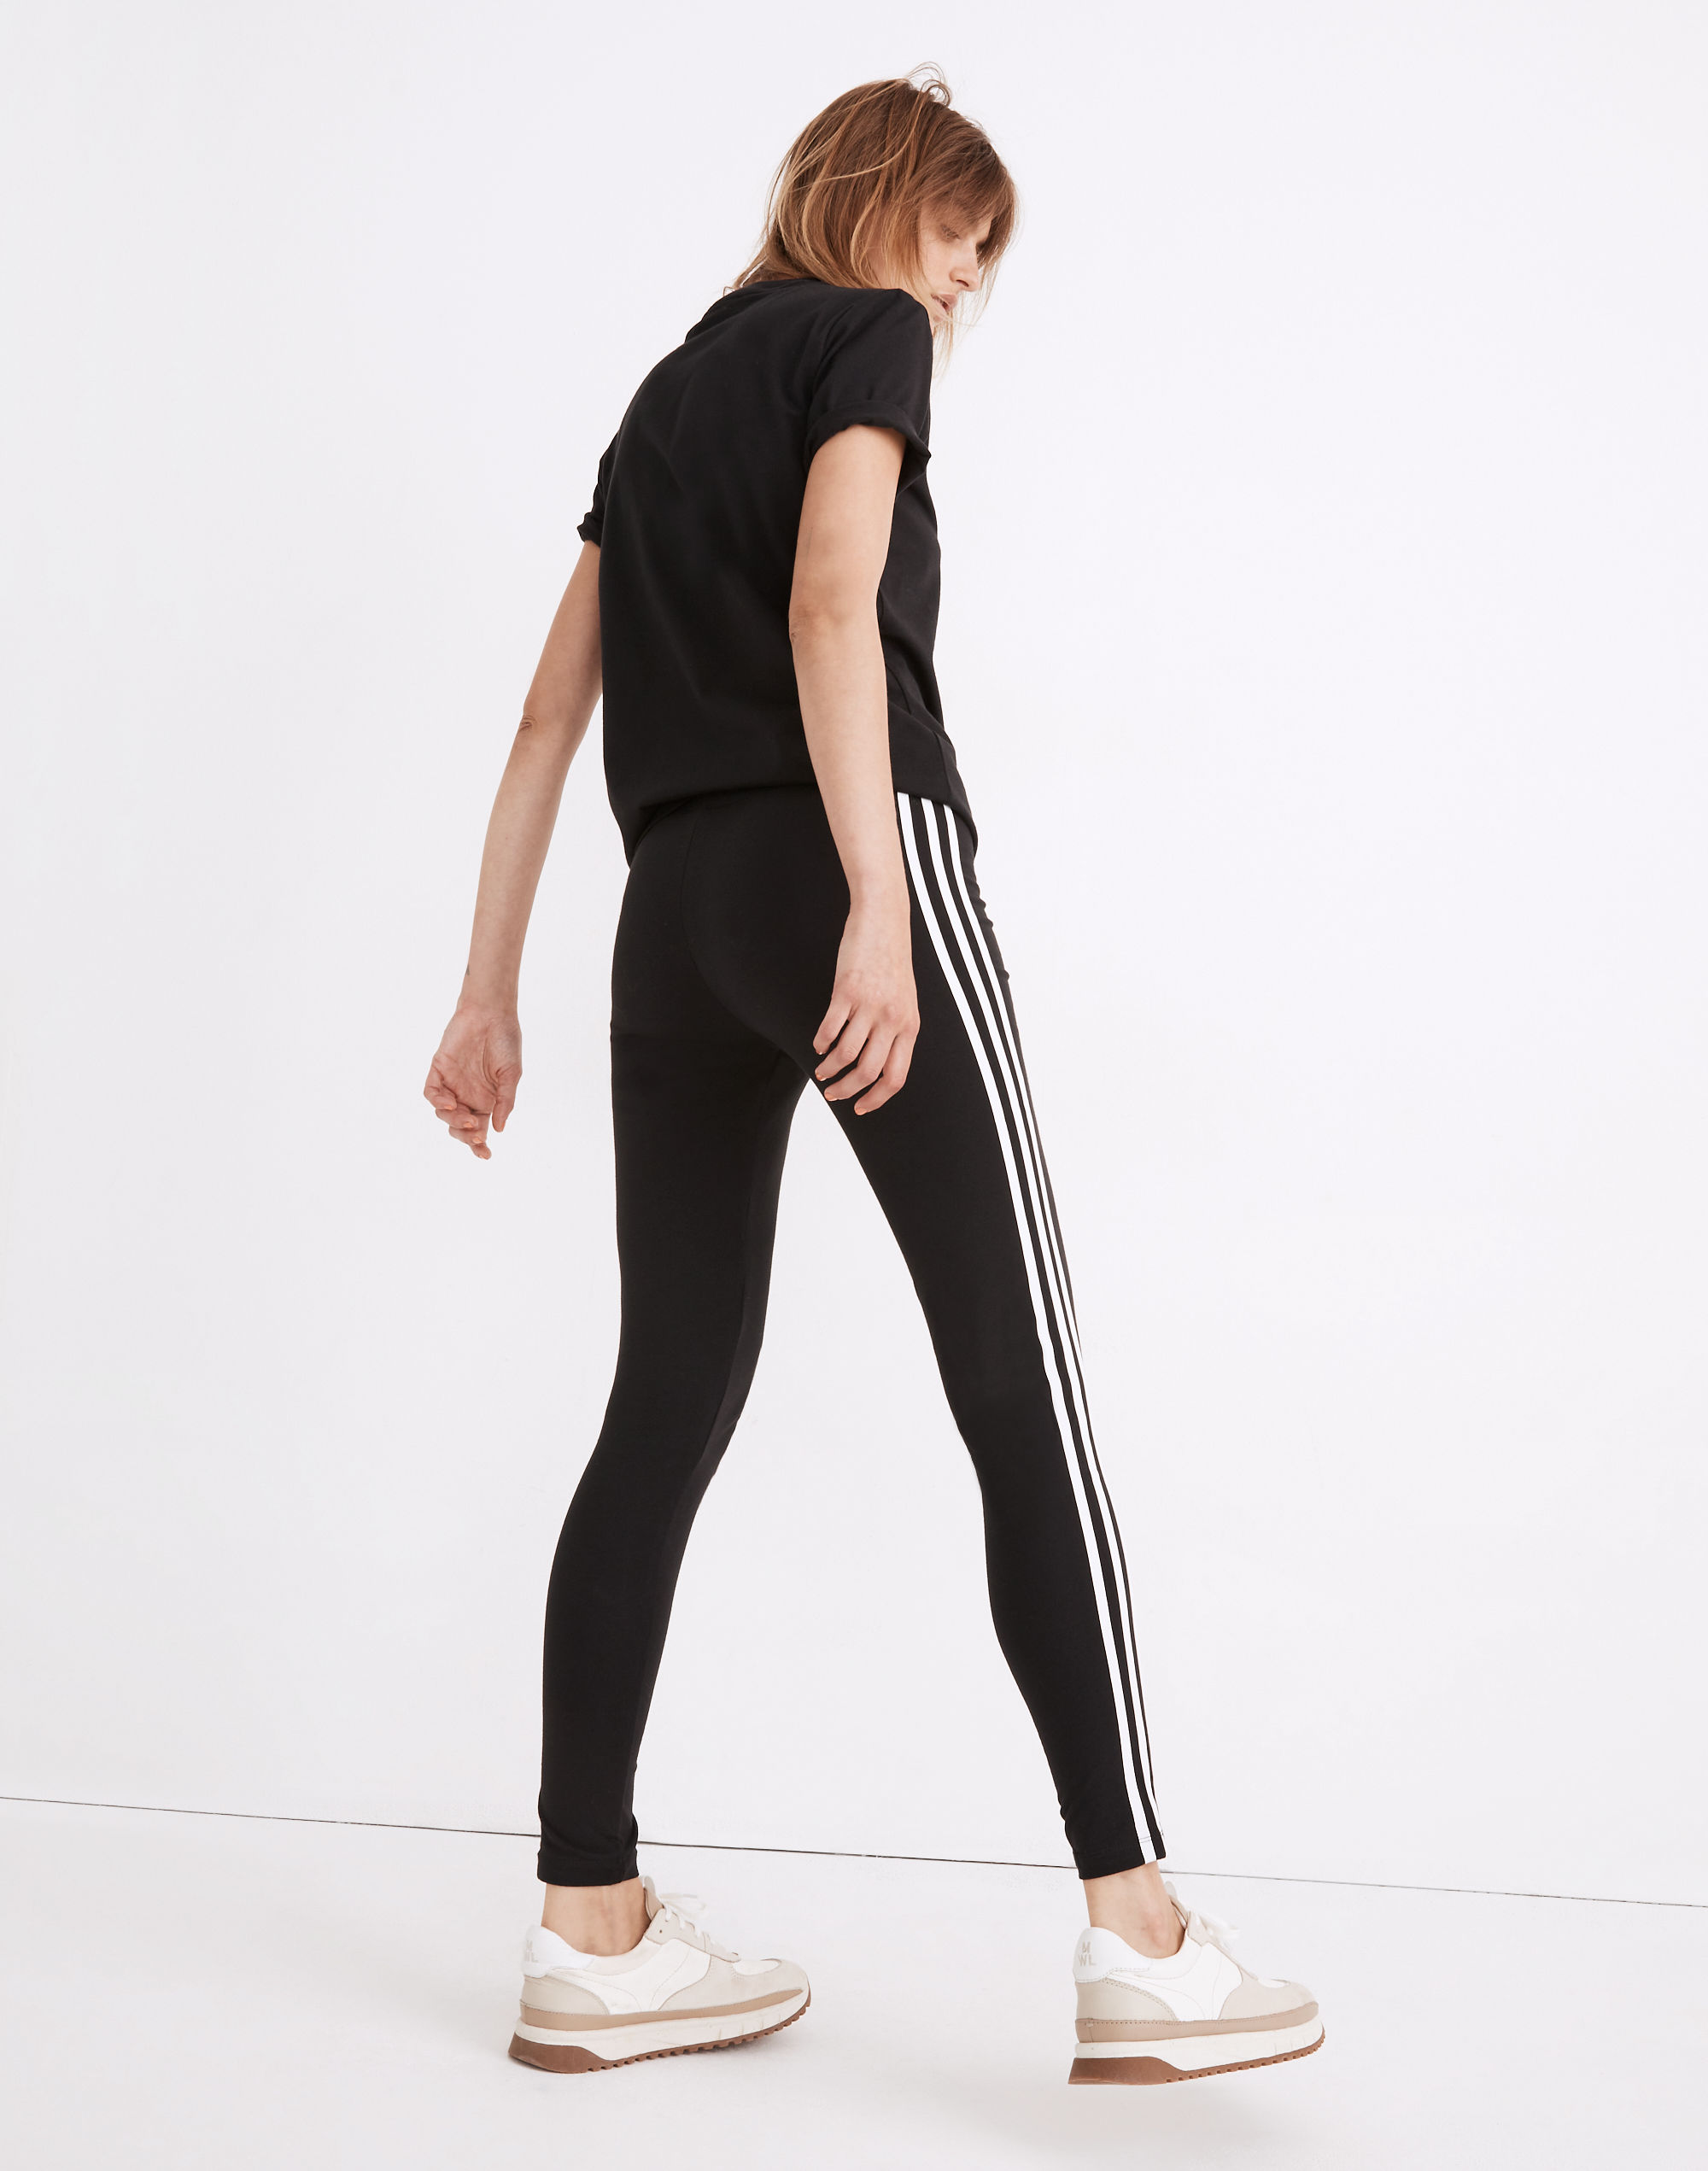 Adidas 3-Stripes Snake Print Leggings